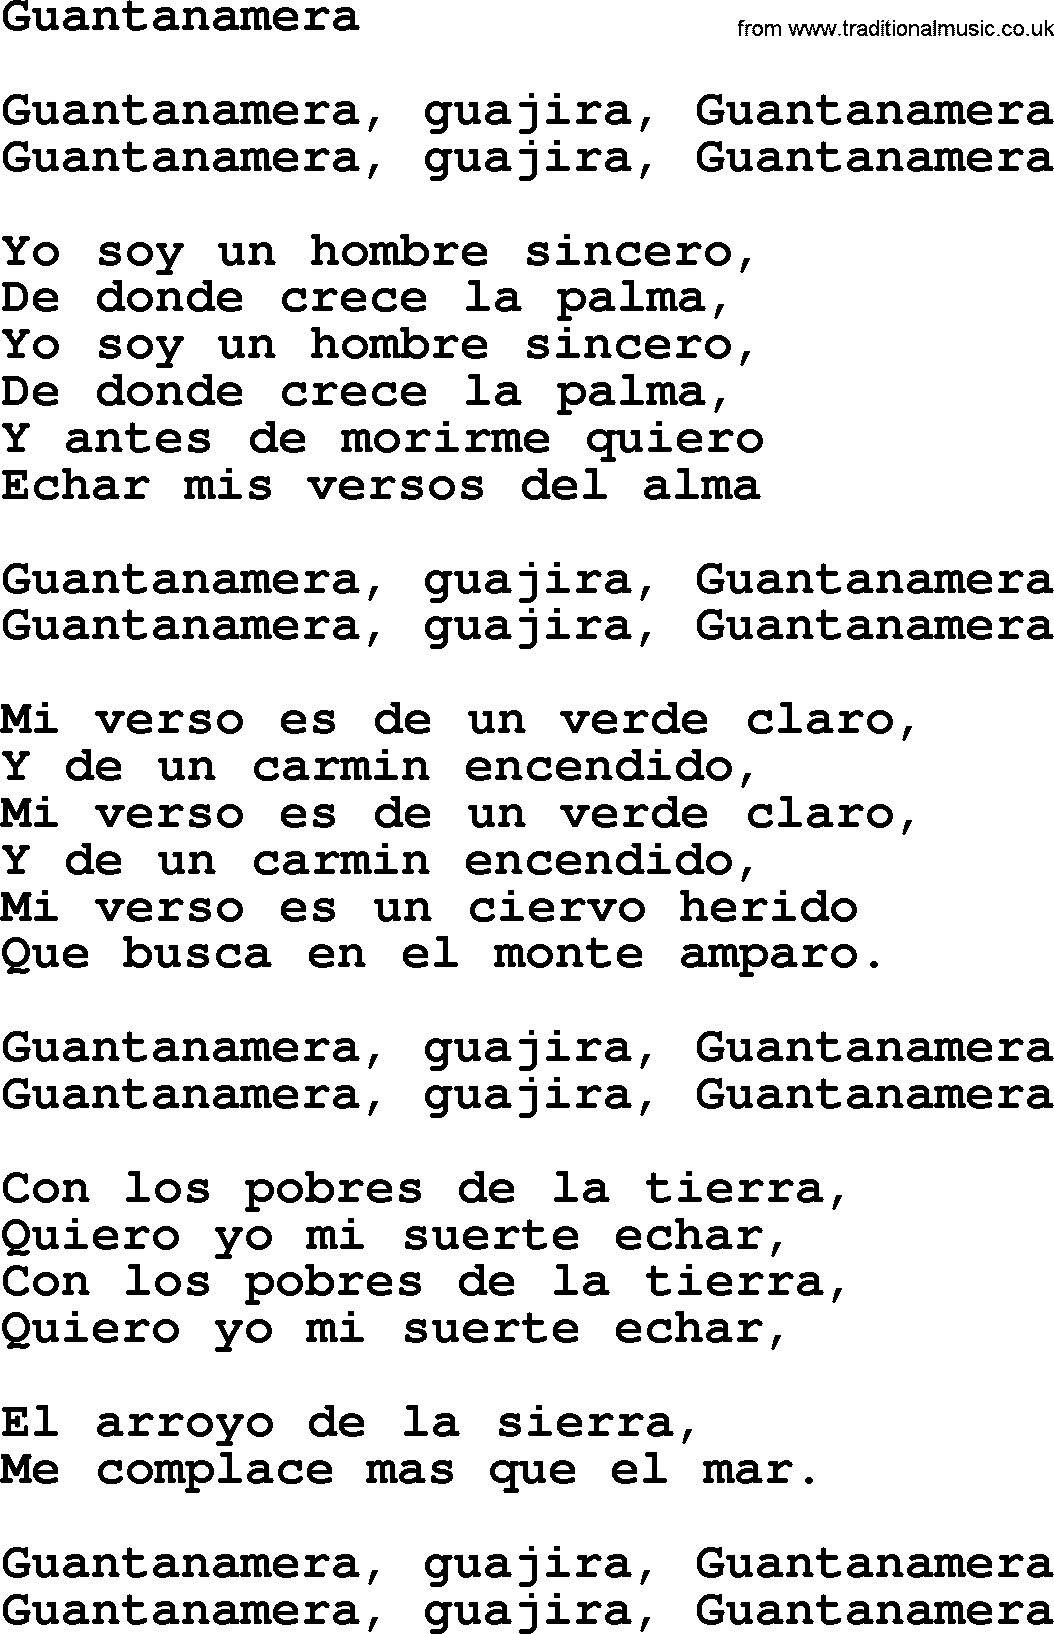 Guantanamera текст. Гуантанамера песня текст. Гуантанамера текст на испанском. Guantanamera текст на испанском.